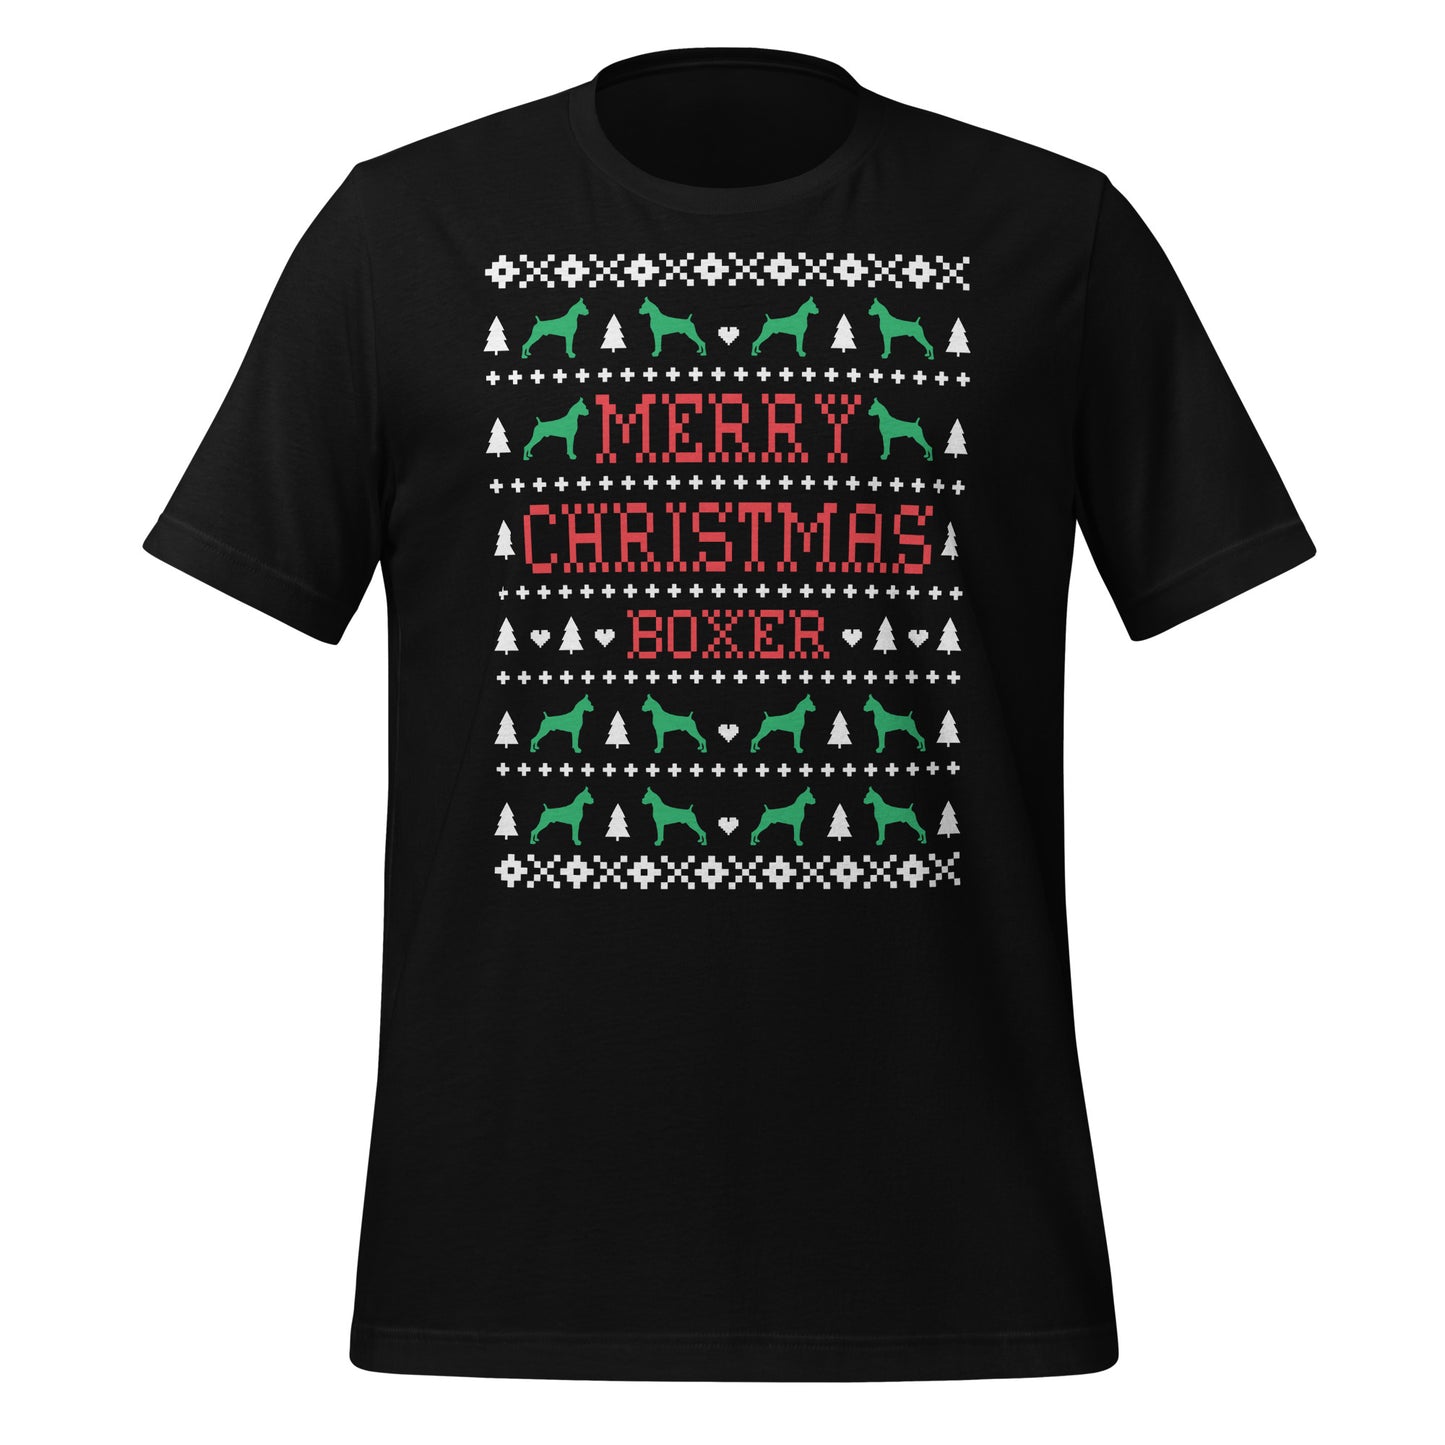 Boxer Dog Ugly Christmas t-shirt black by Dog Artistry.